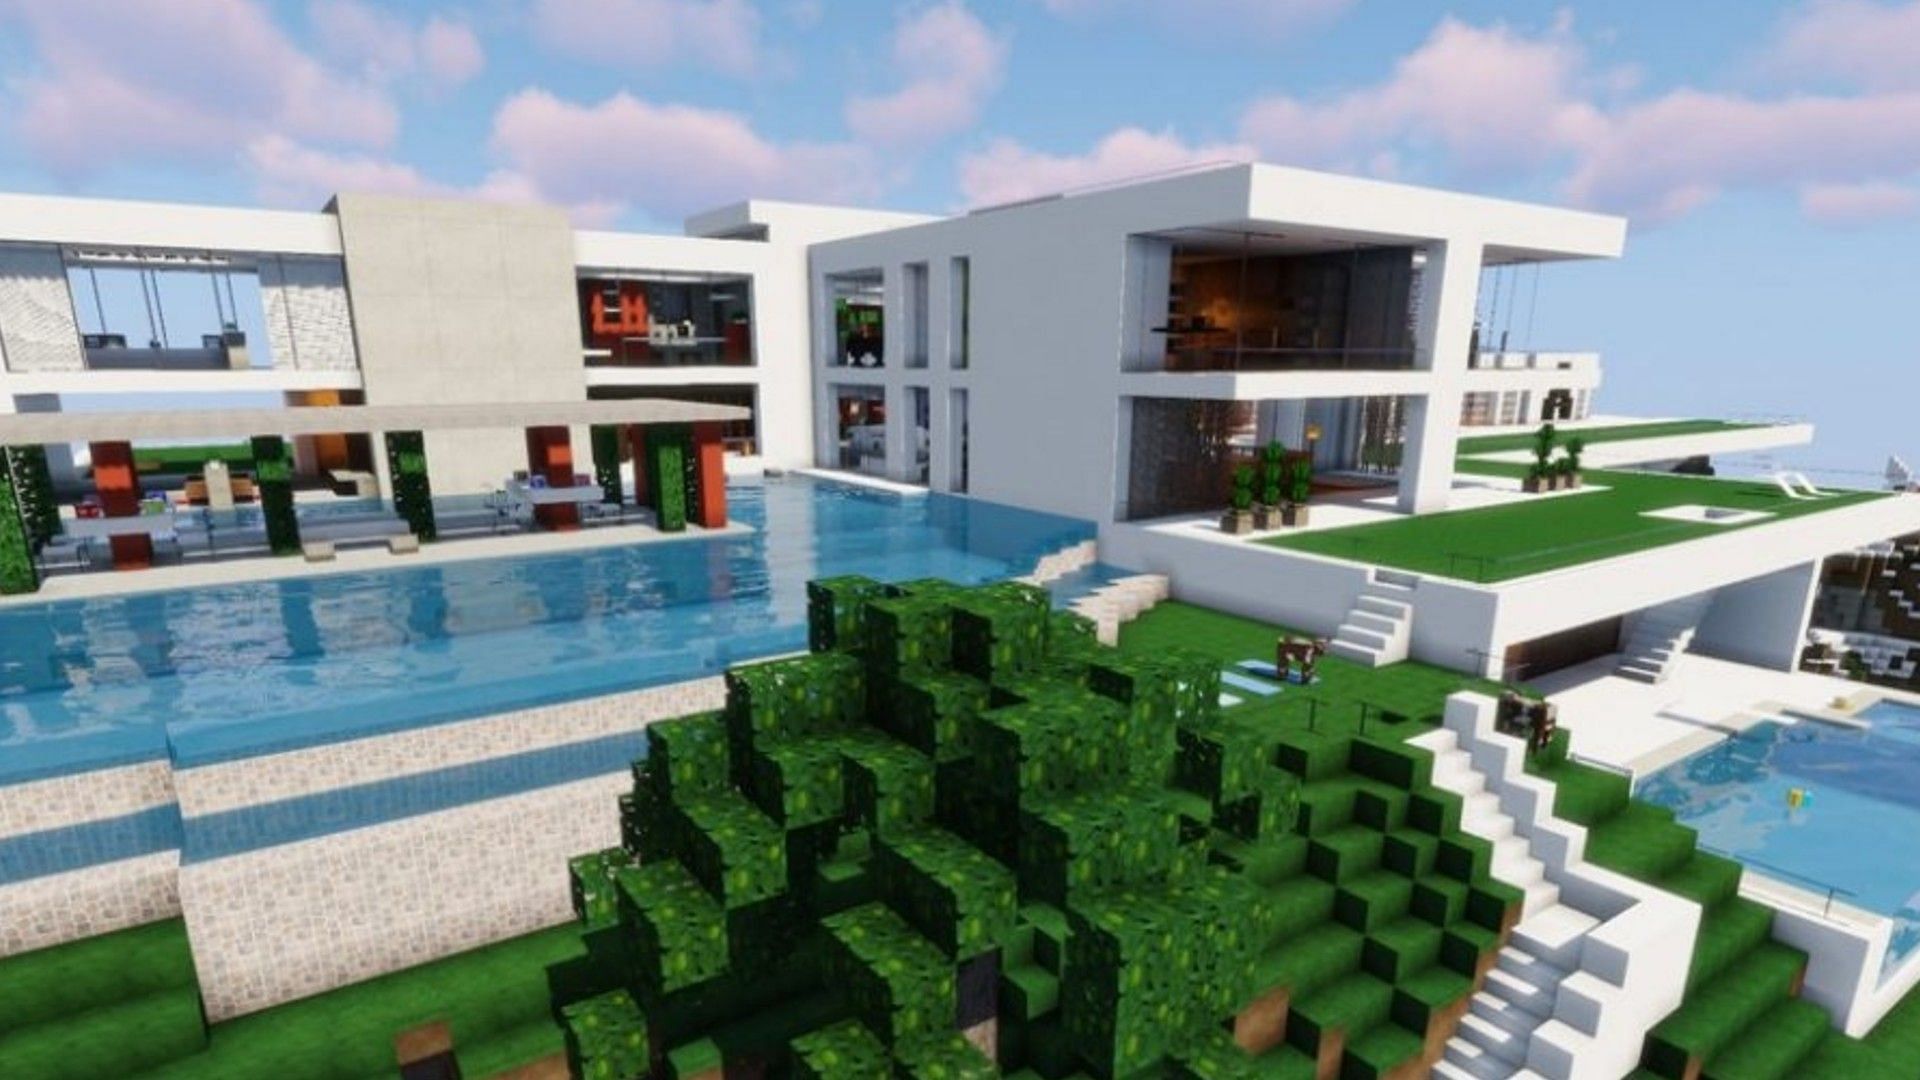 A modern house build (Image via Minecraft)